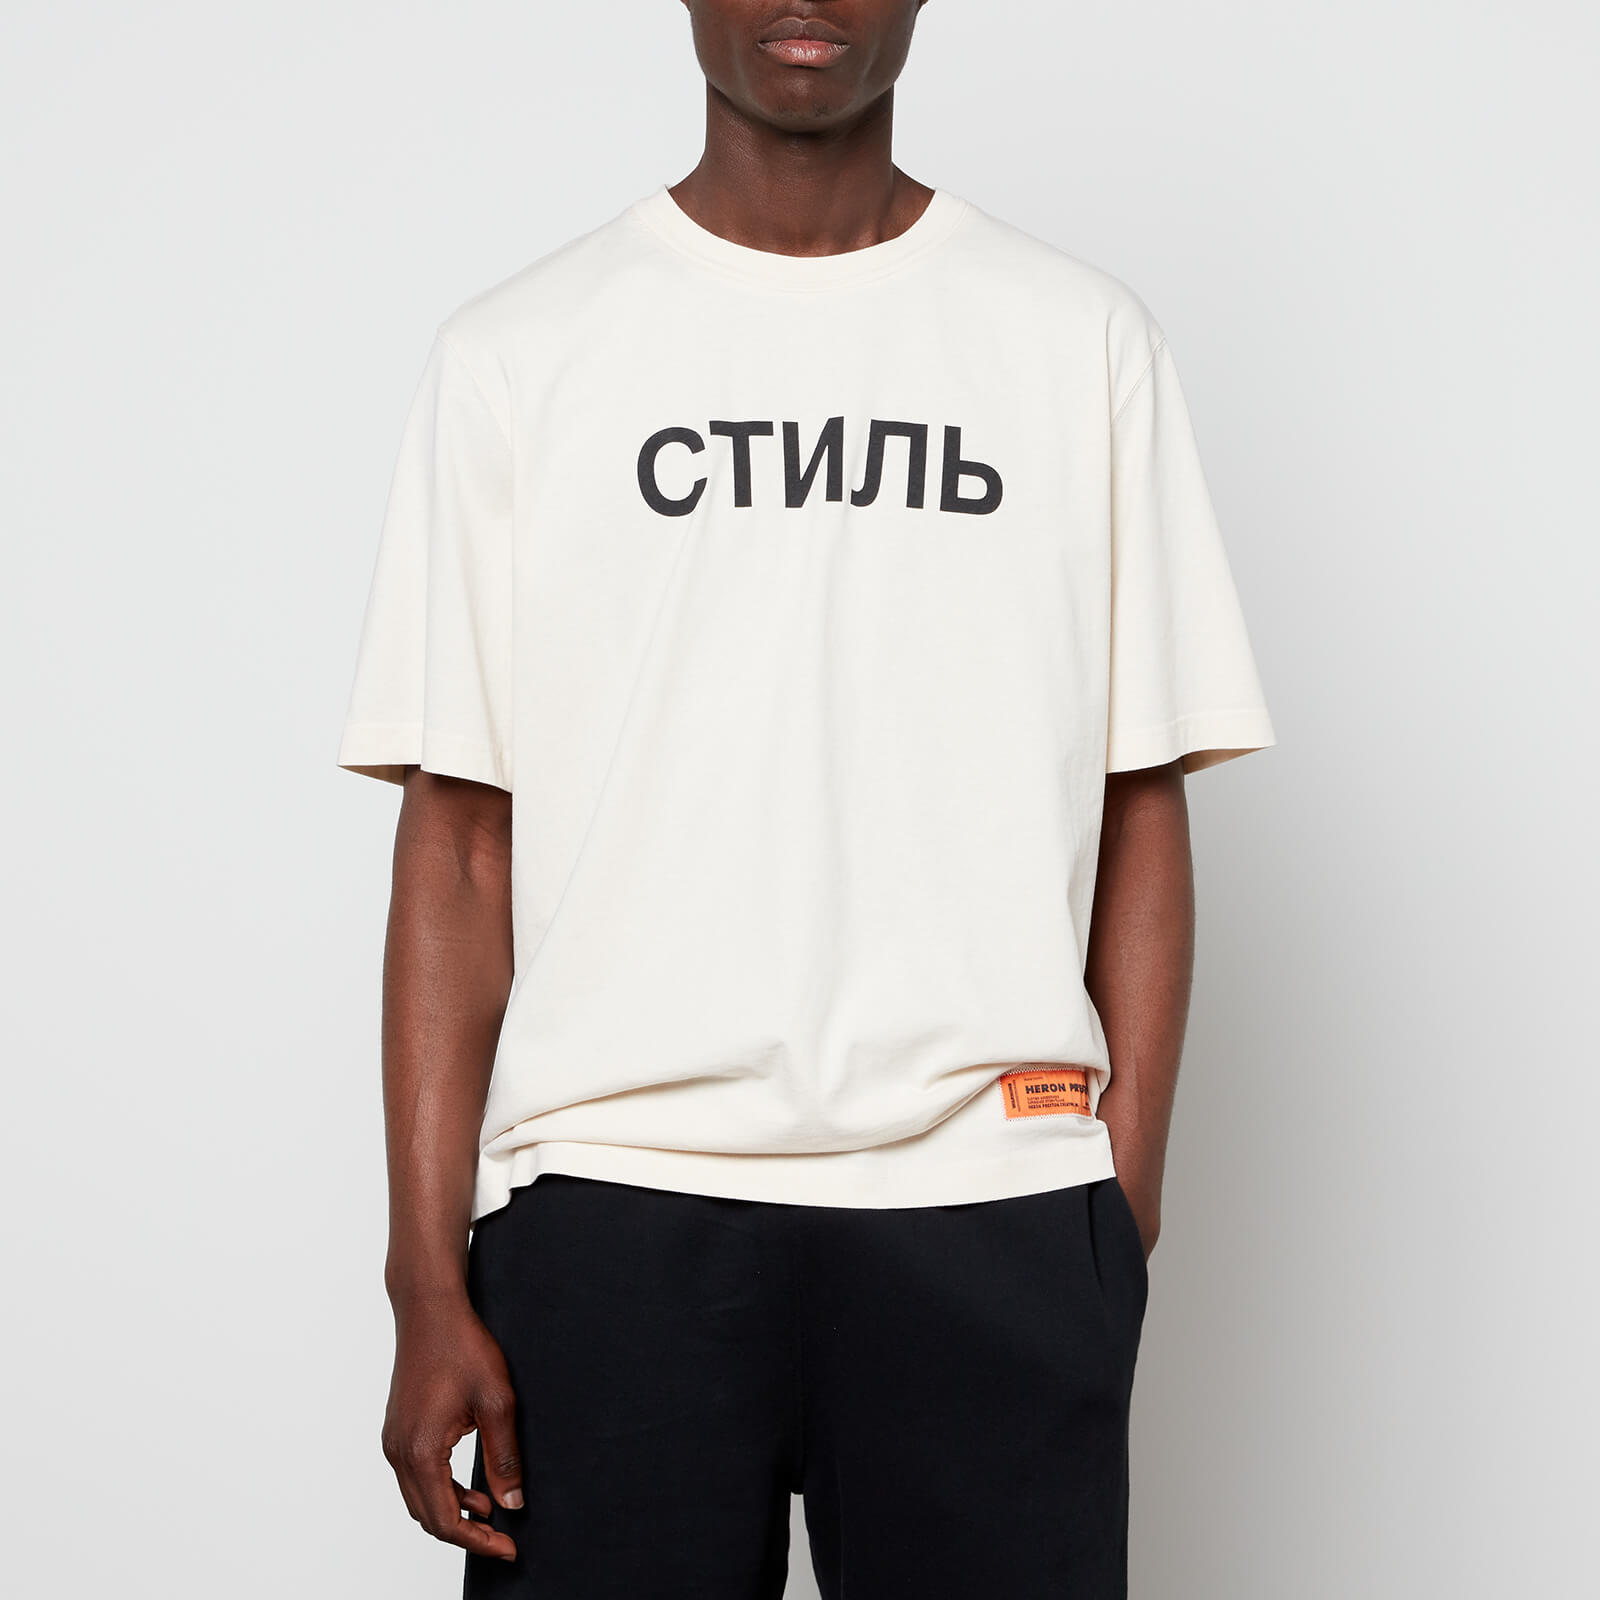 Heron Preston Men's Ctnmb Logo T-Shirt - White - S